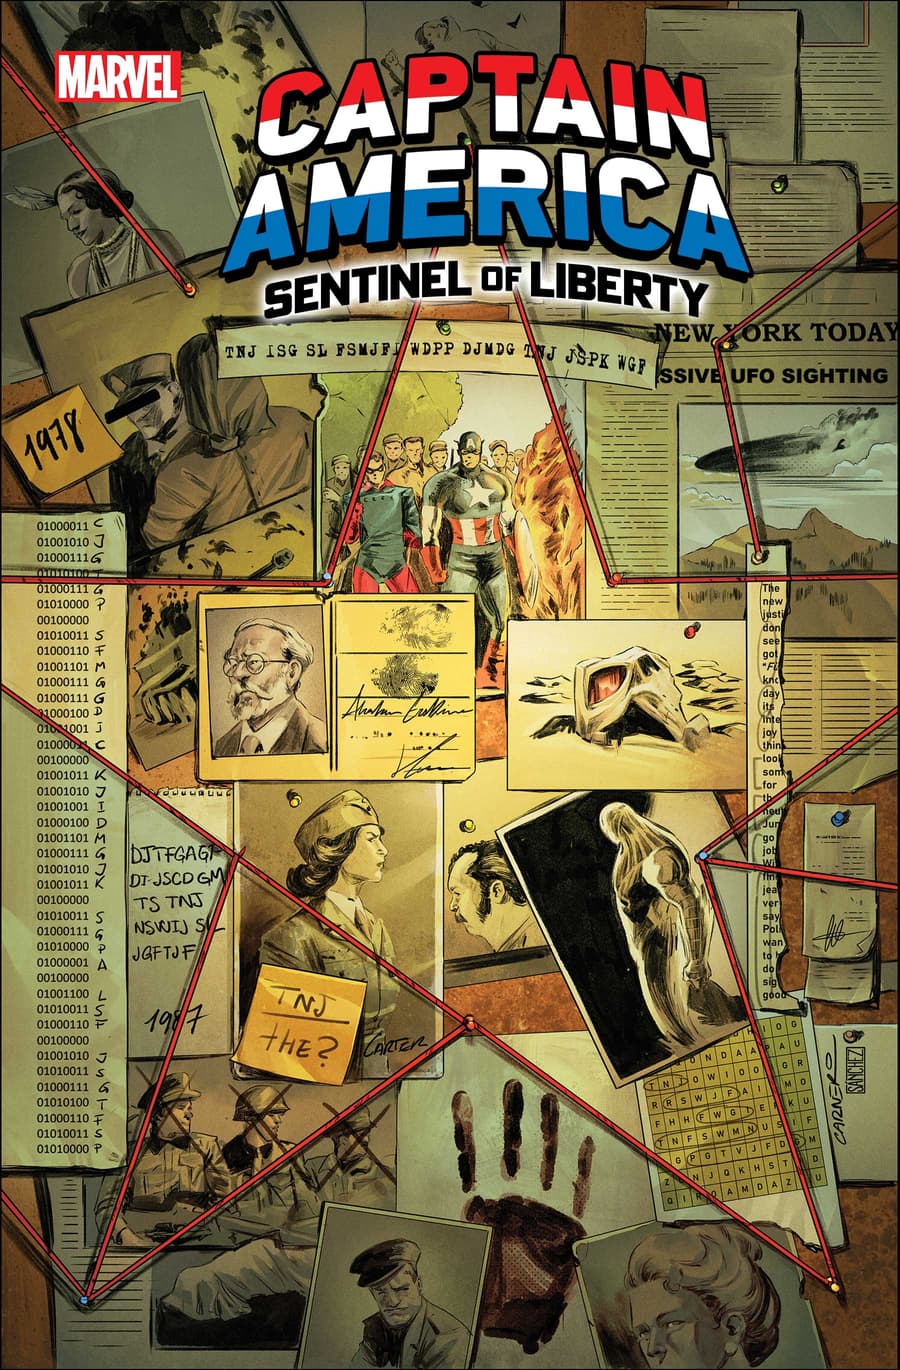 CAPTAIN AMERICA: SENTINEL OF LIBERTY #4 cover by Carmen Carnero